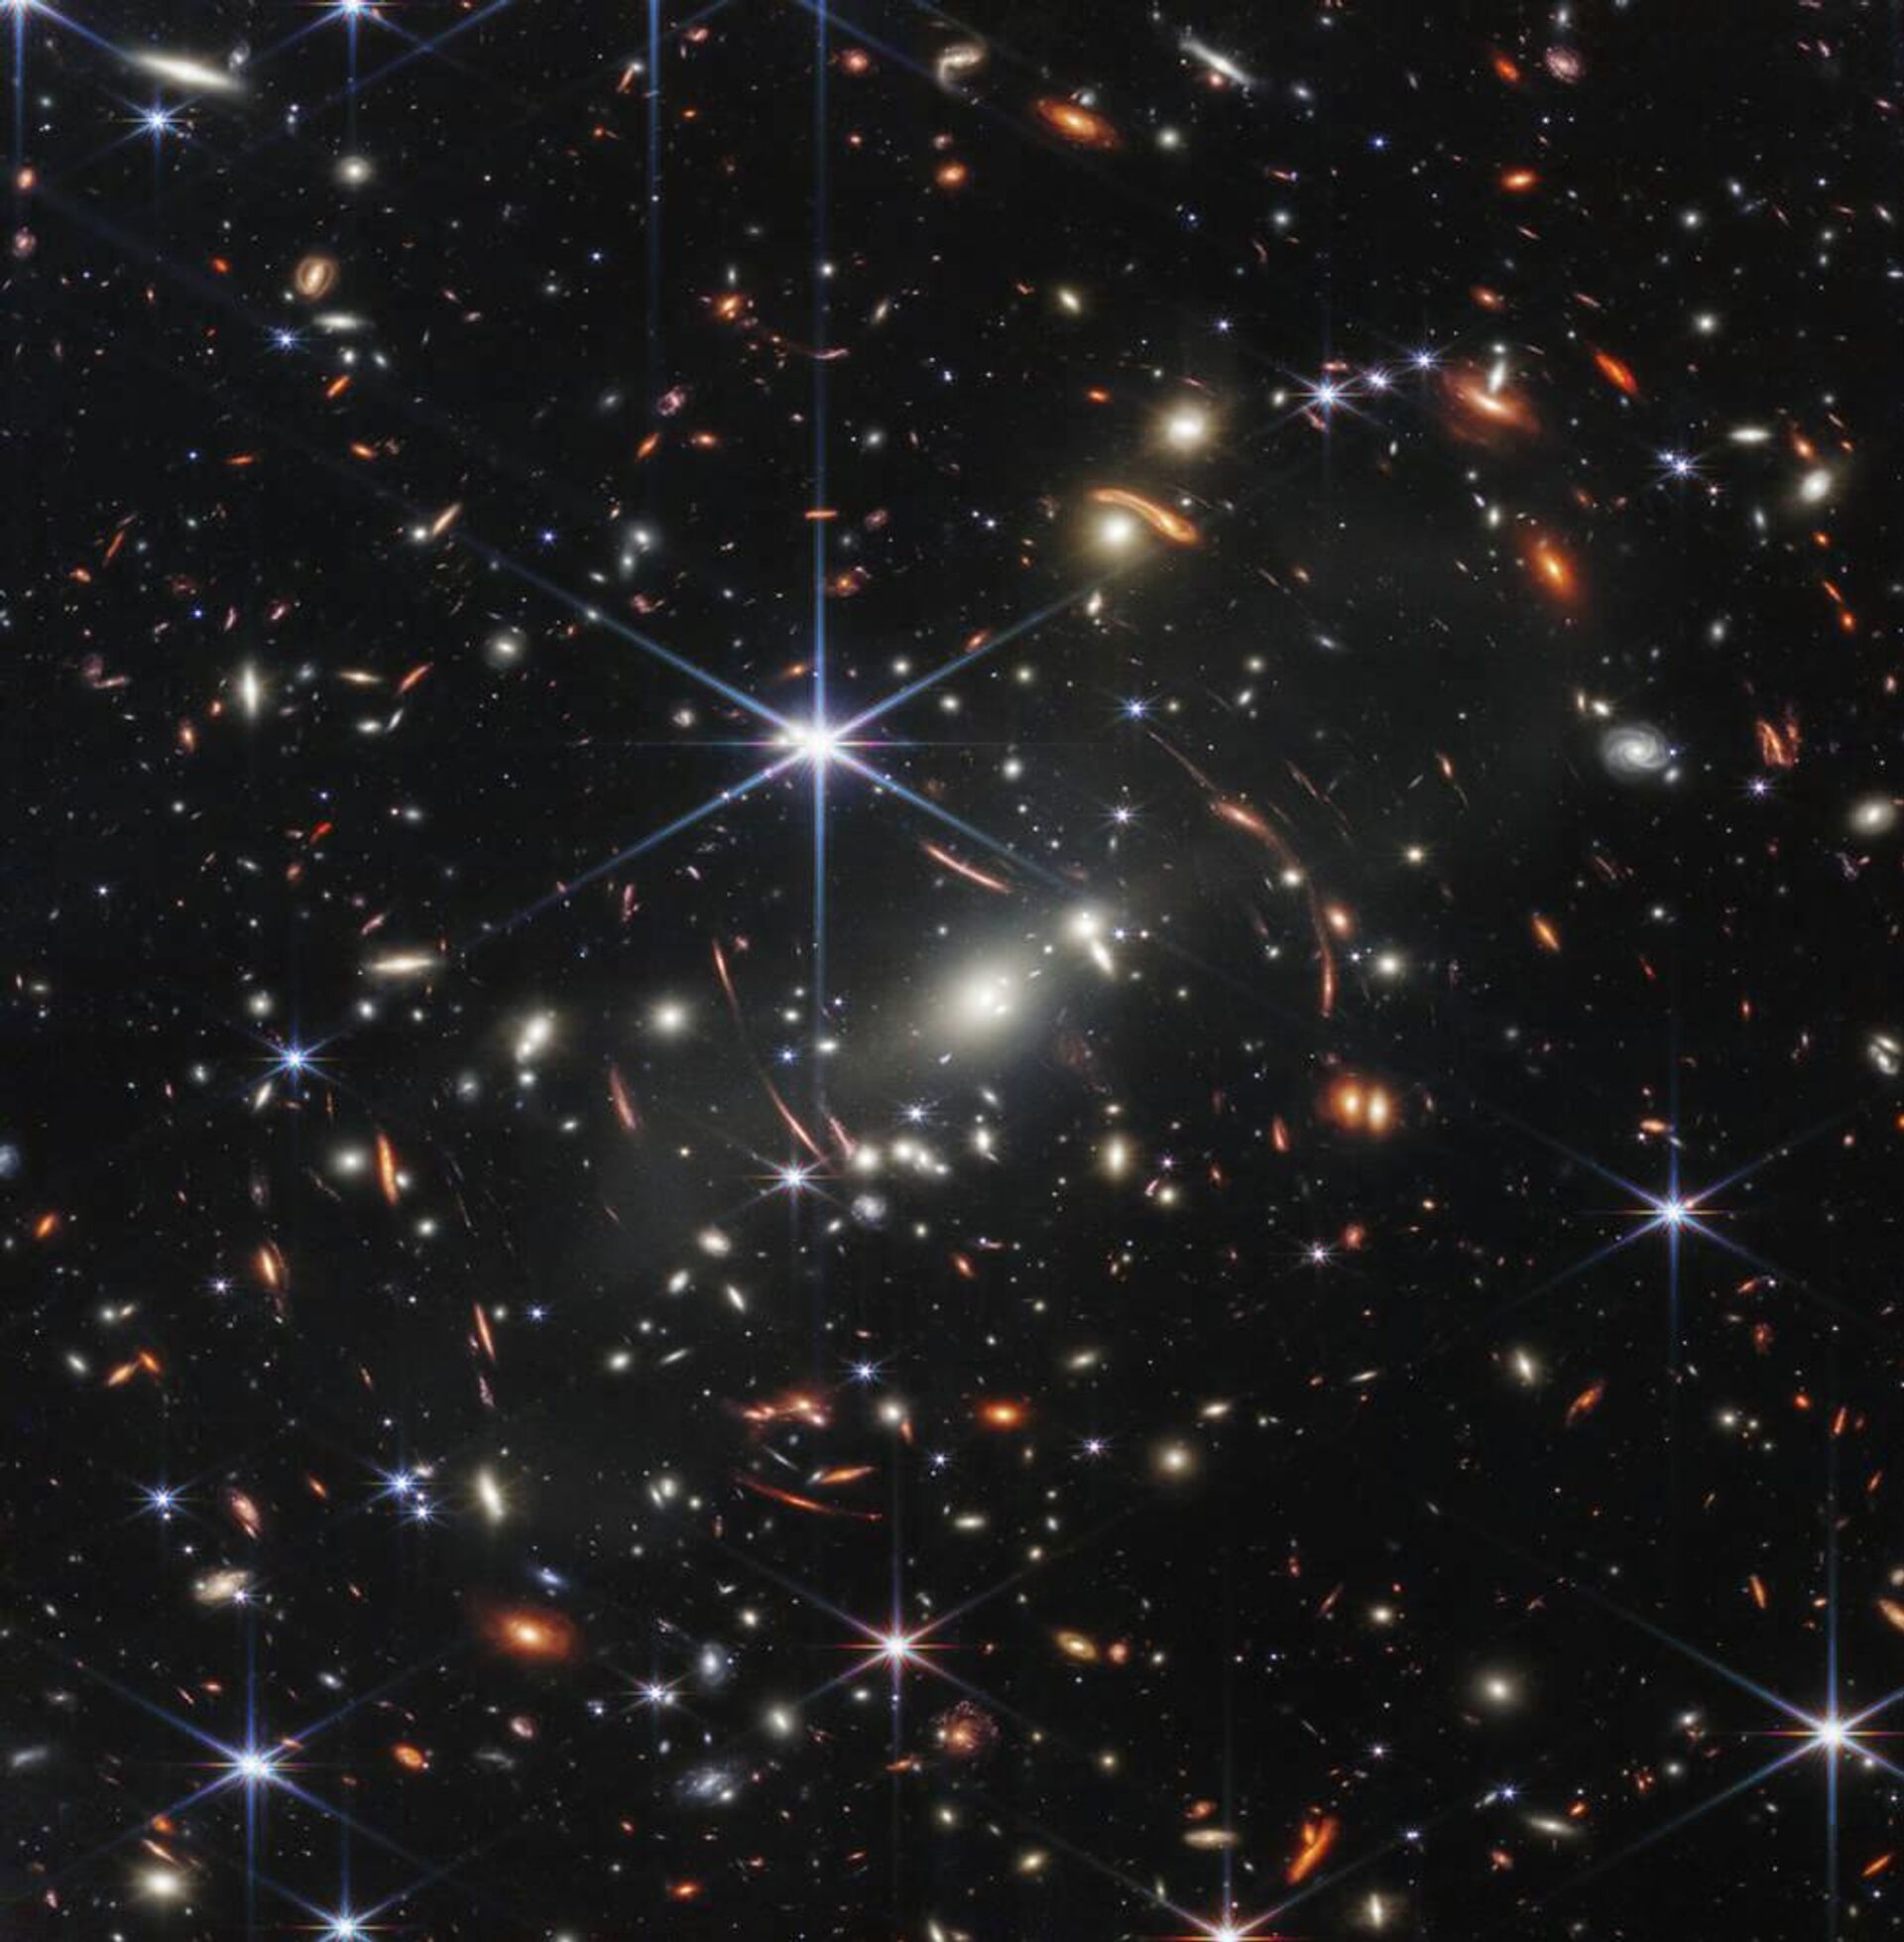 El universo profundo captado por el telescopio James Webb. - Sputnik Mundo, 1920, 14.07.2022